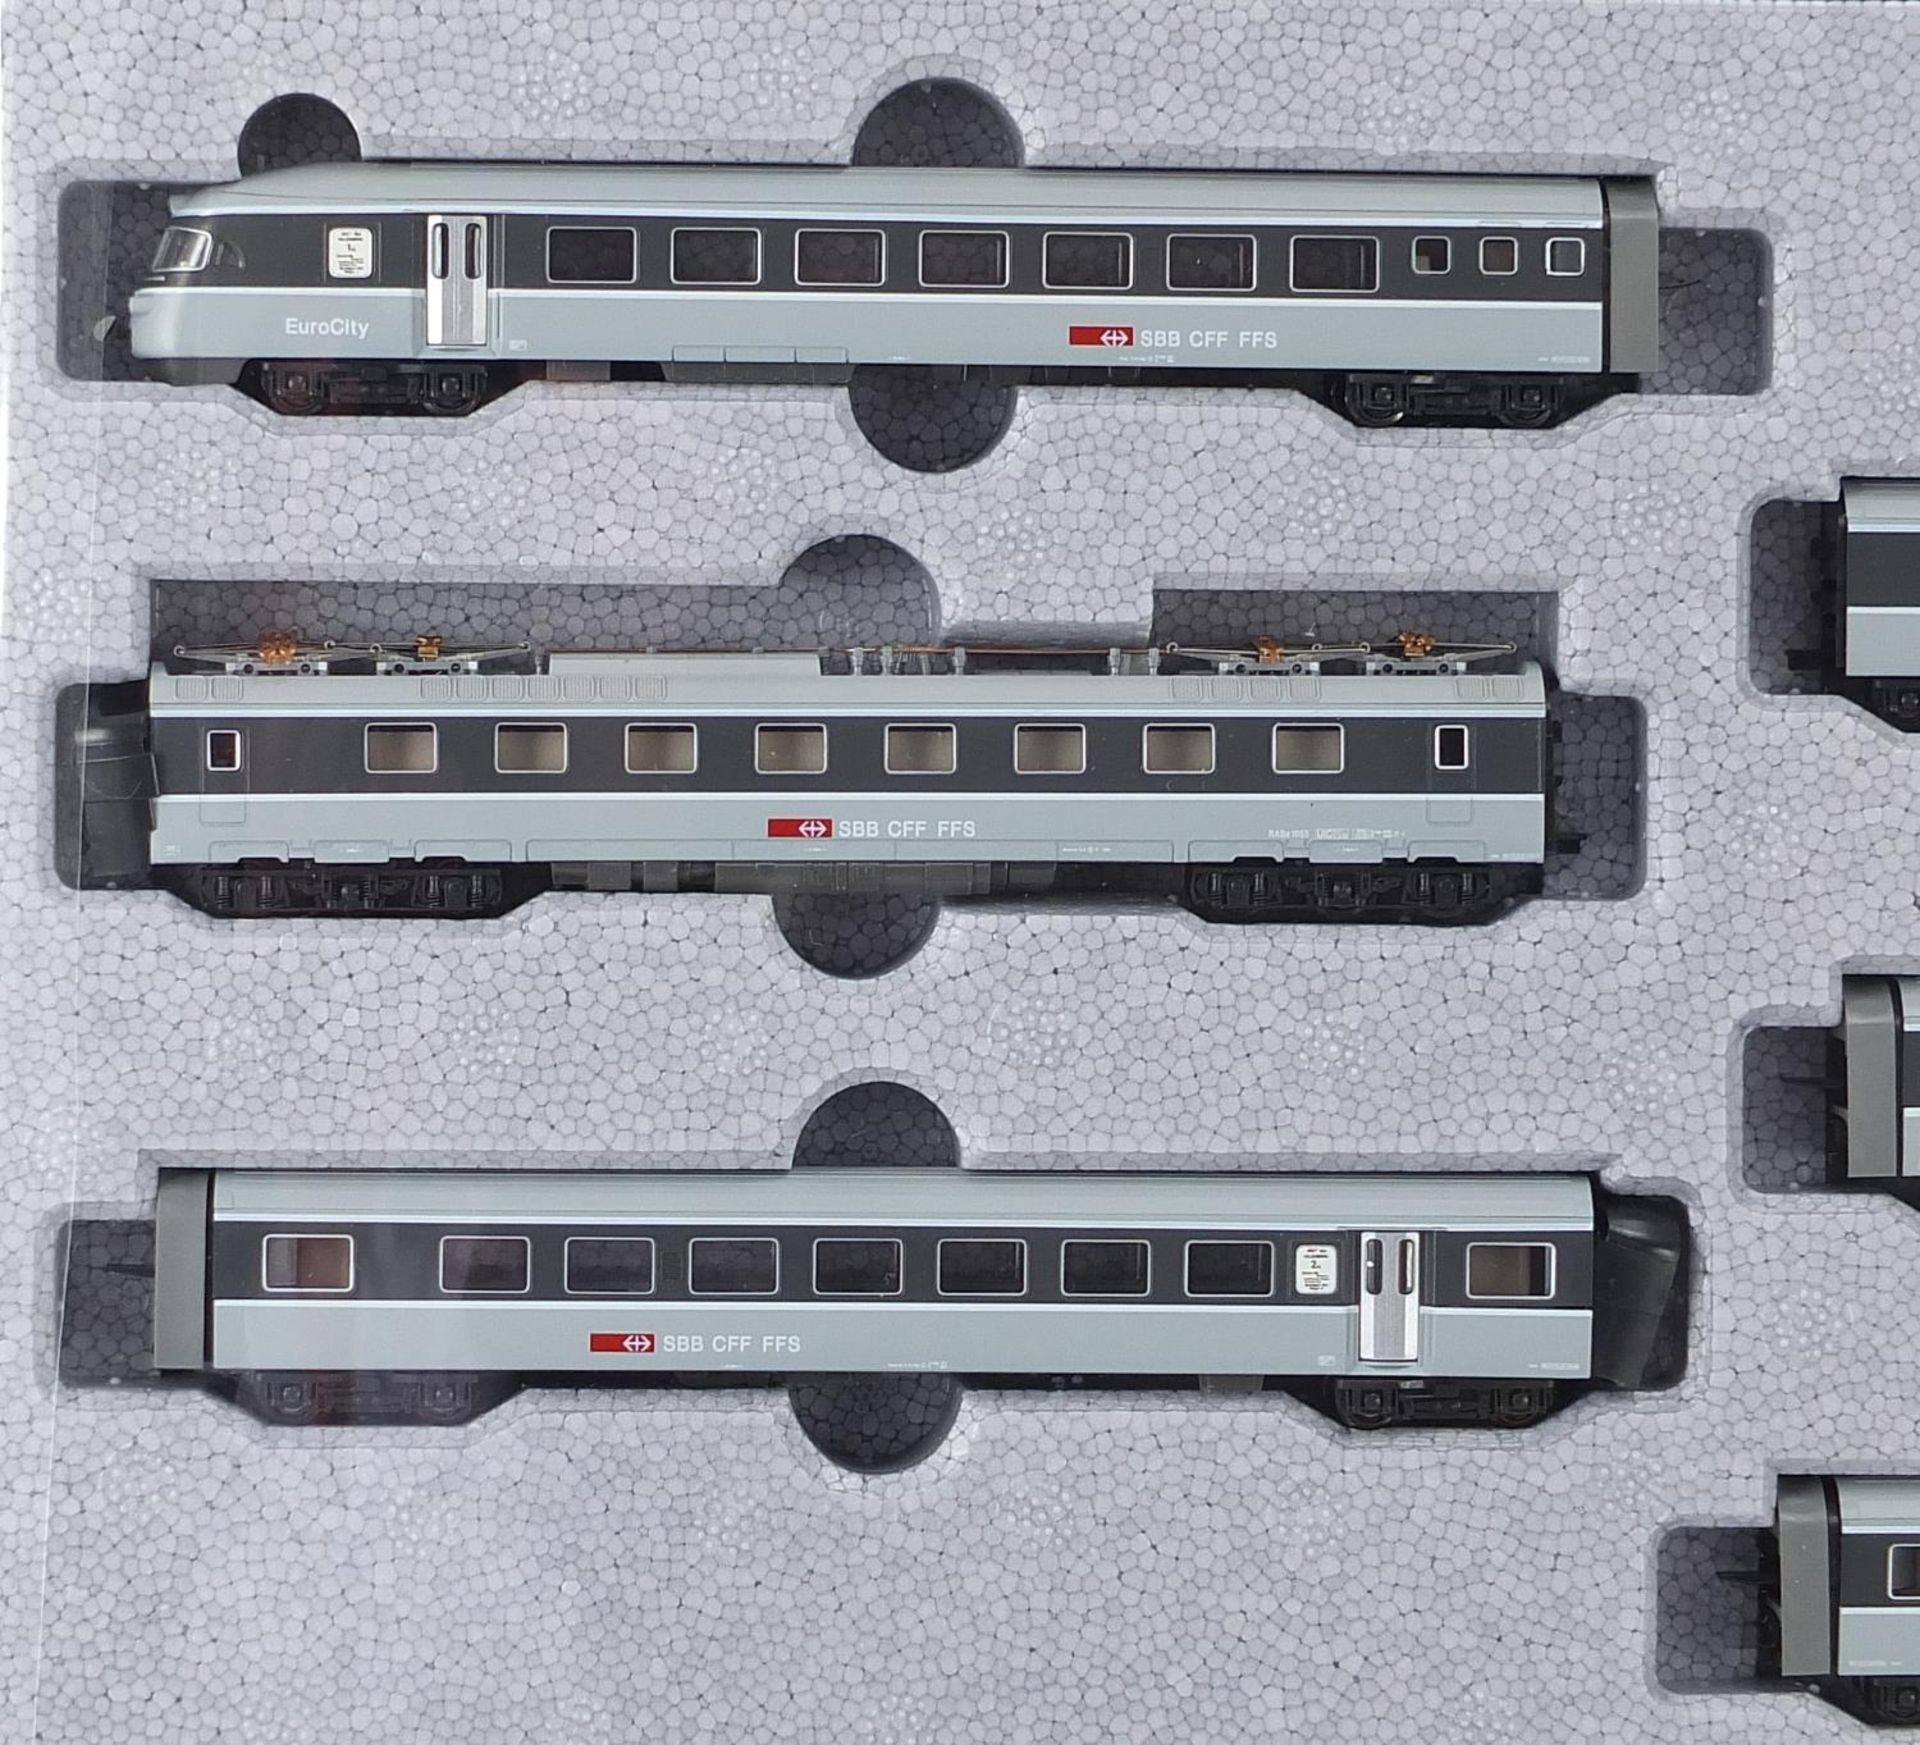 Kato N gauge model railway SBB CFF FFS RABe Euro City 6 - TLG set with box - Image 2 of 3